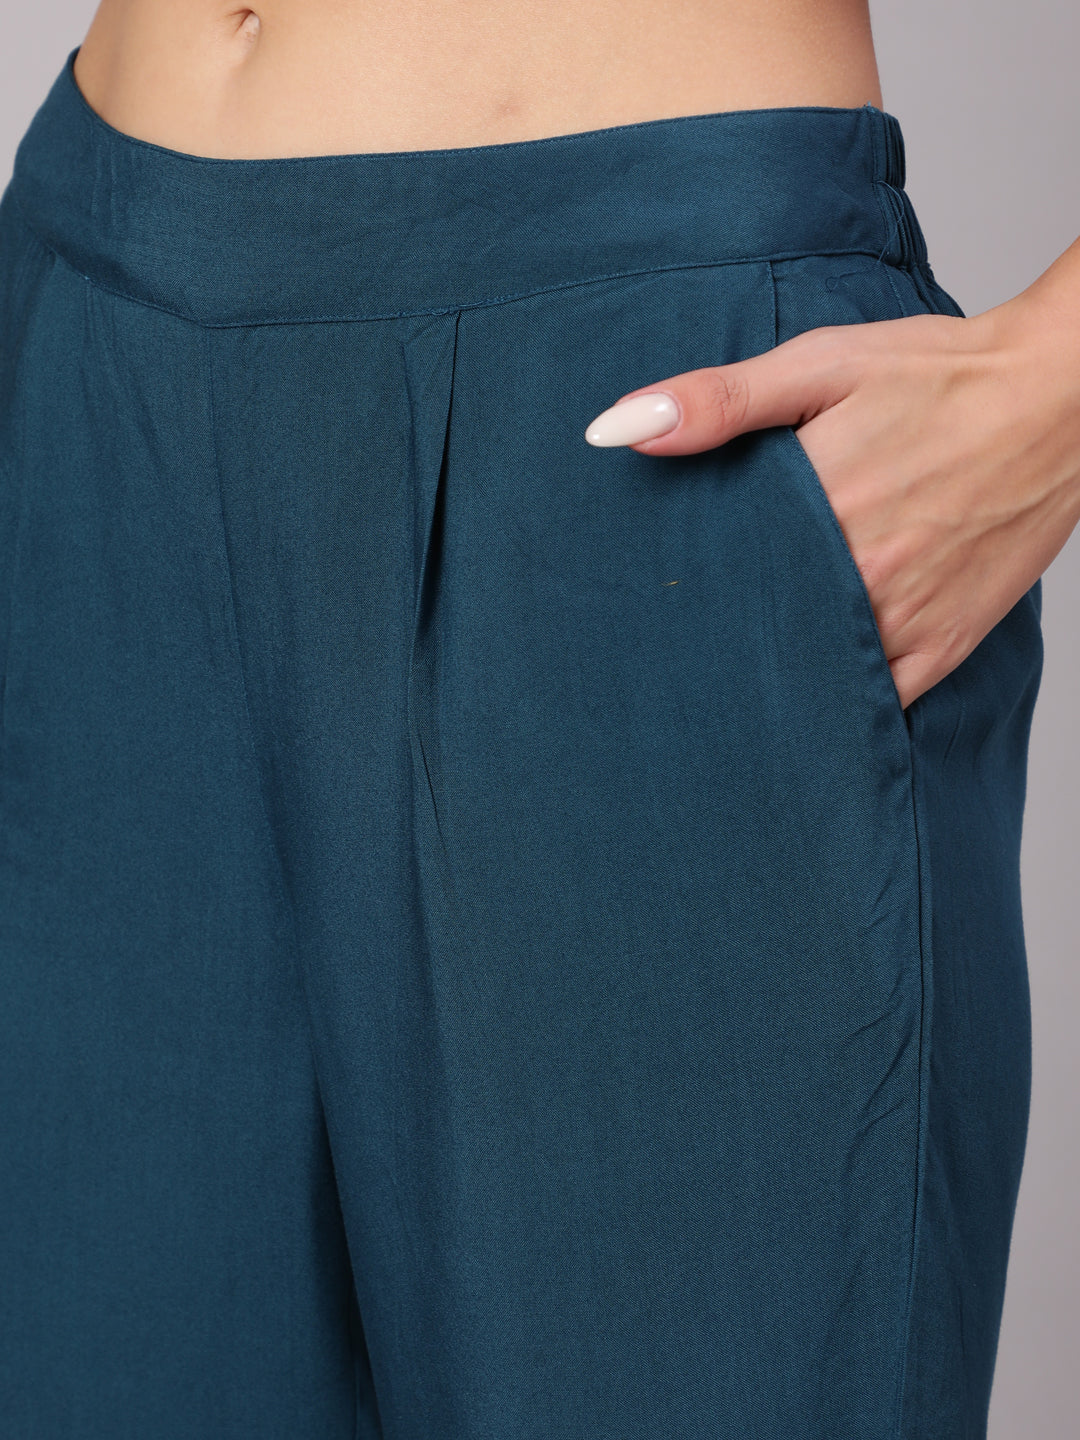 Teal Silk Jacquard Embroidered Straight Kurta With Pants And  Tie-Dye Chiffon Dupatta